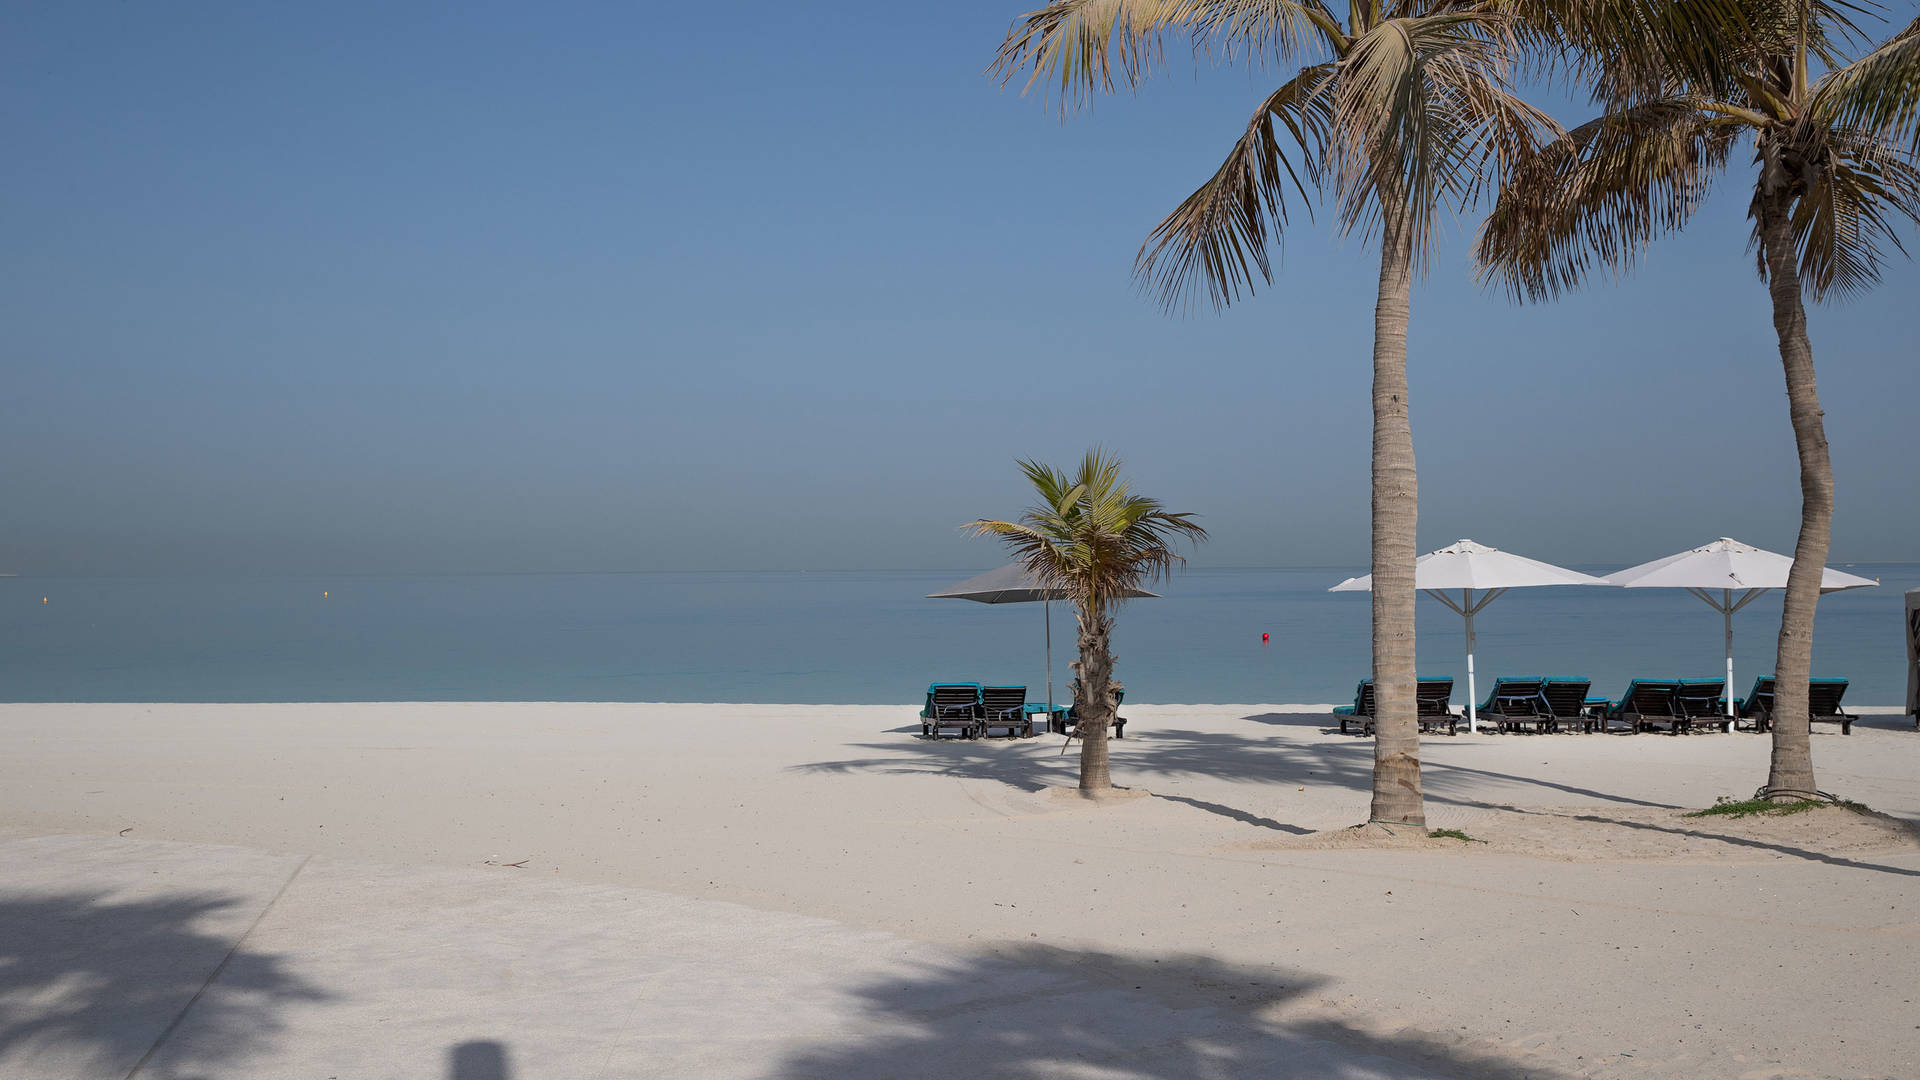 View of the beach in Dubai